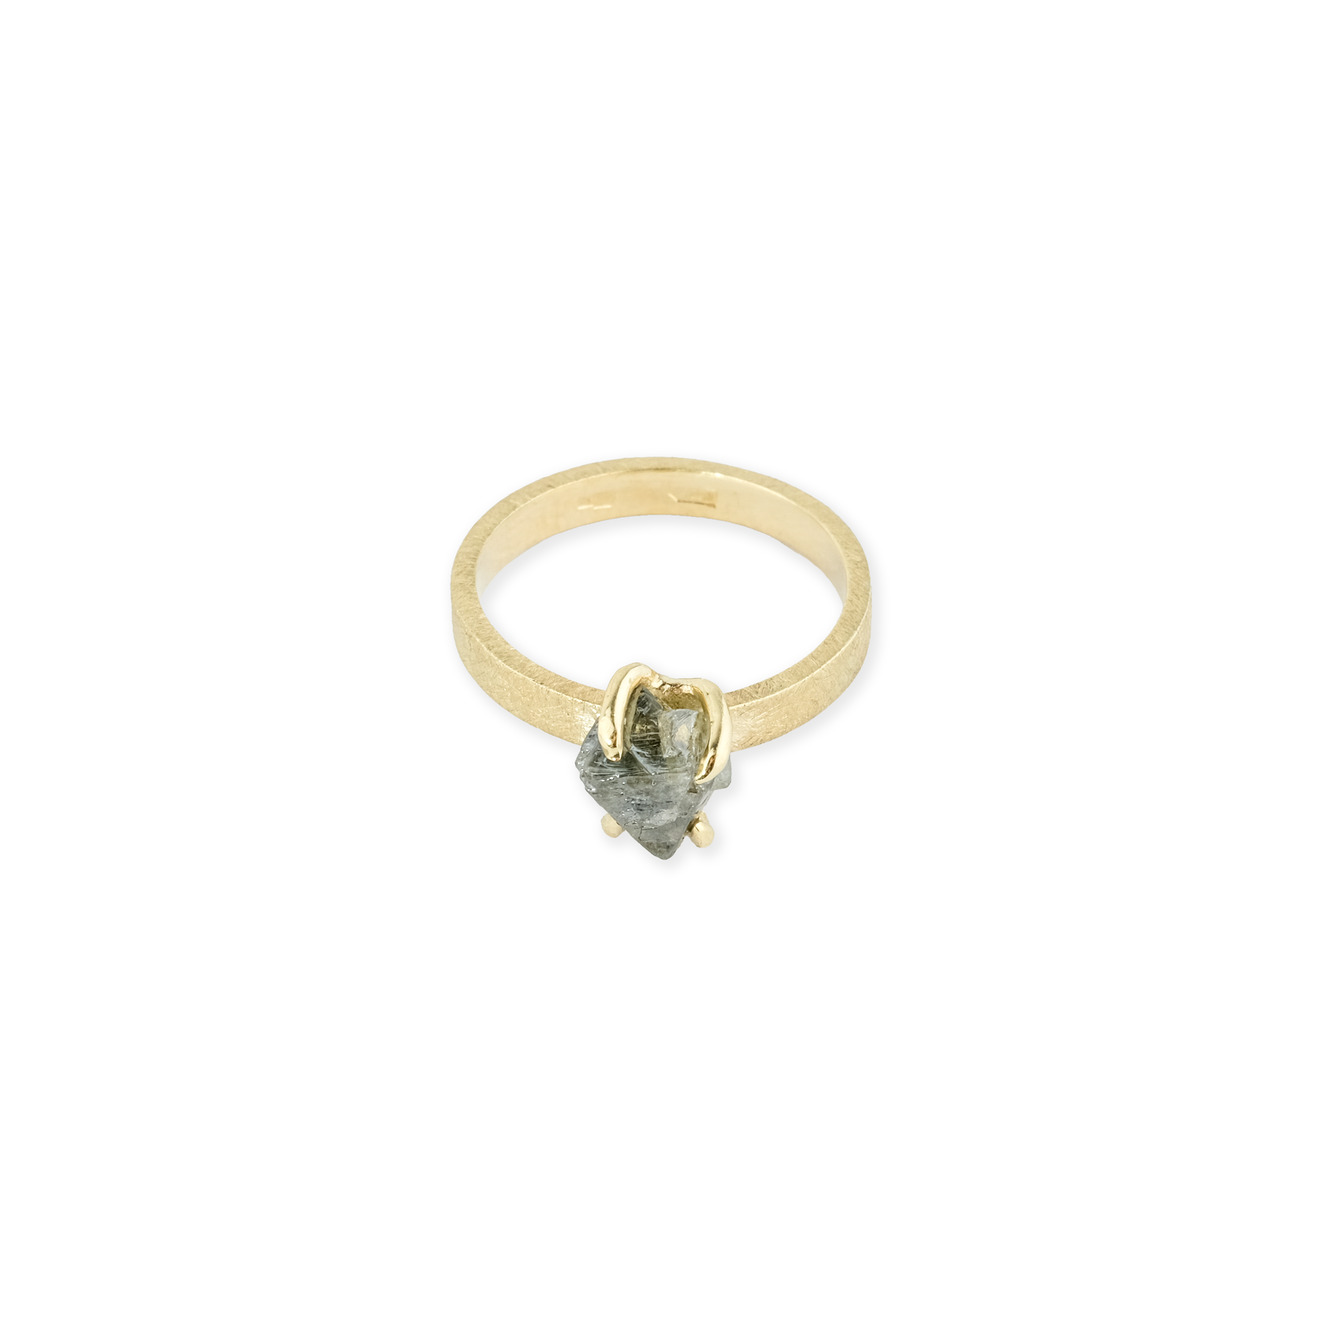 Kintsugi Jewelry Кольцо Rough diamond из золота с кристаллом кварца